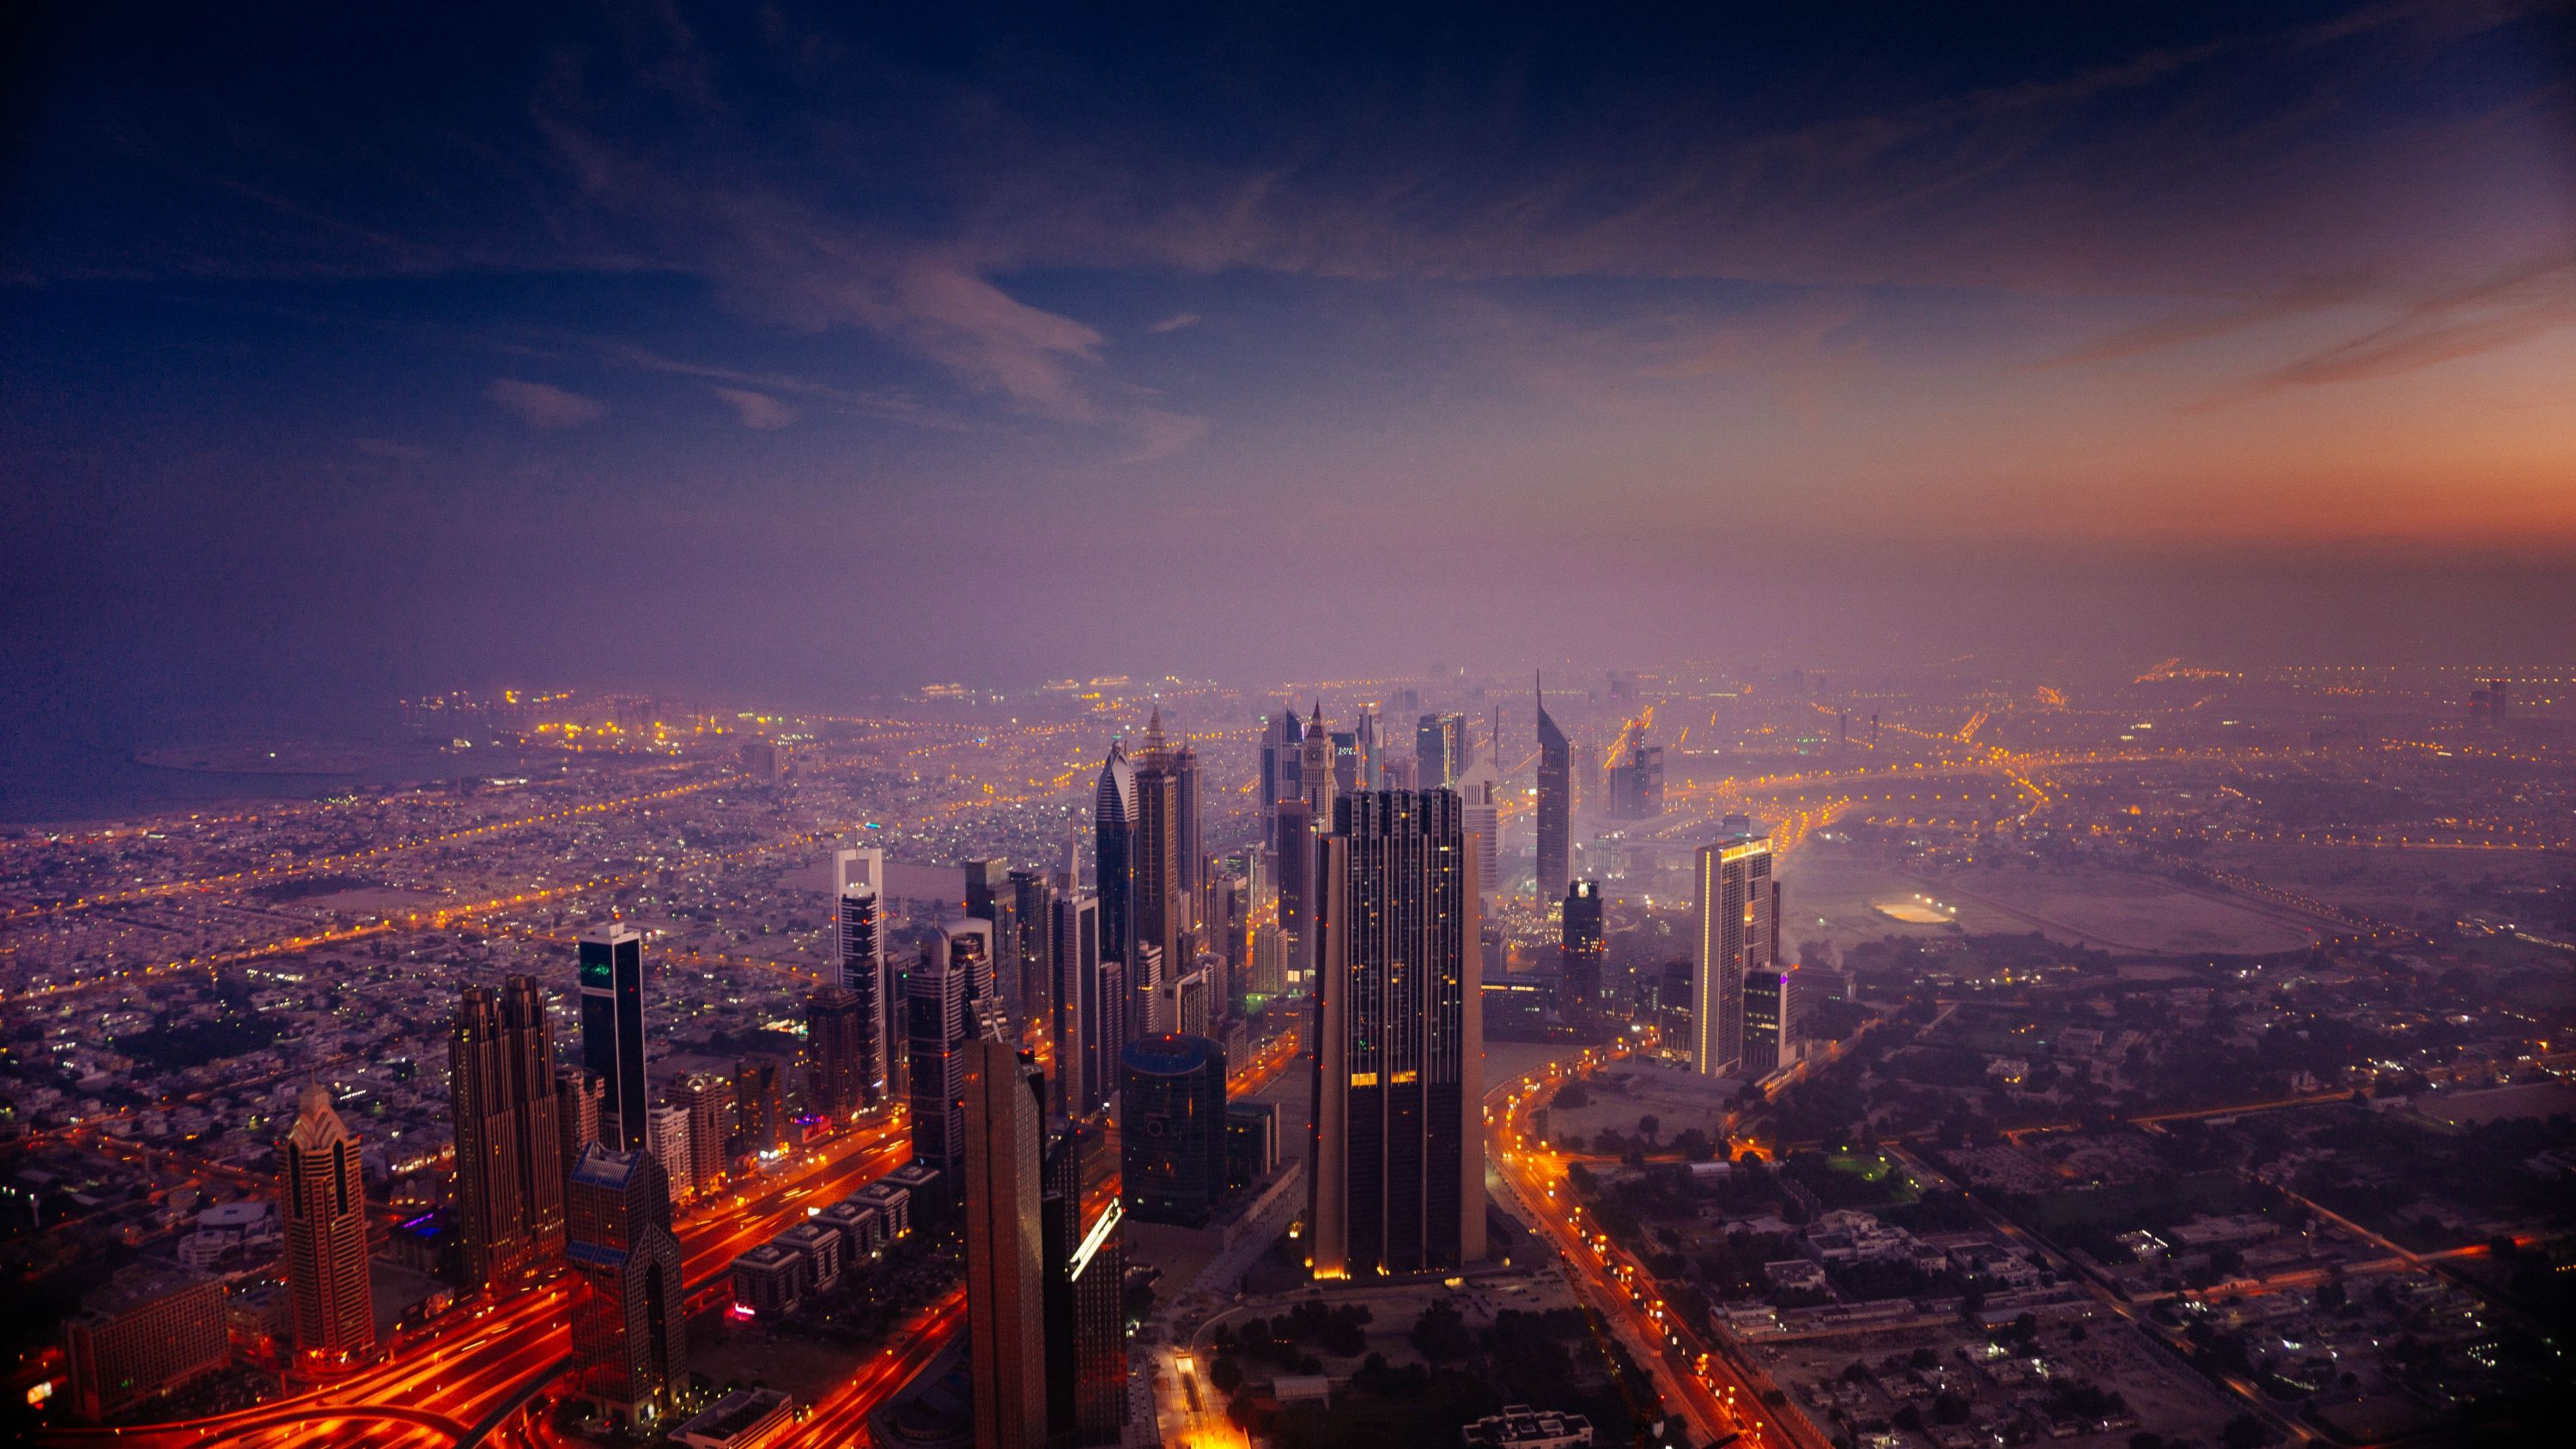 Properties for Buy, Sale & Rent in Dubai - Homestation